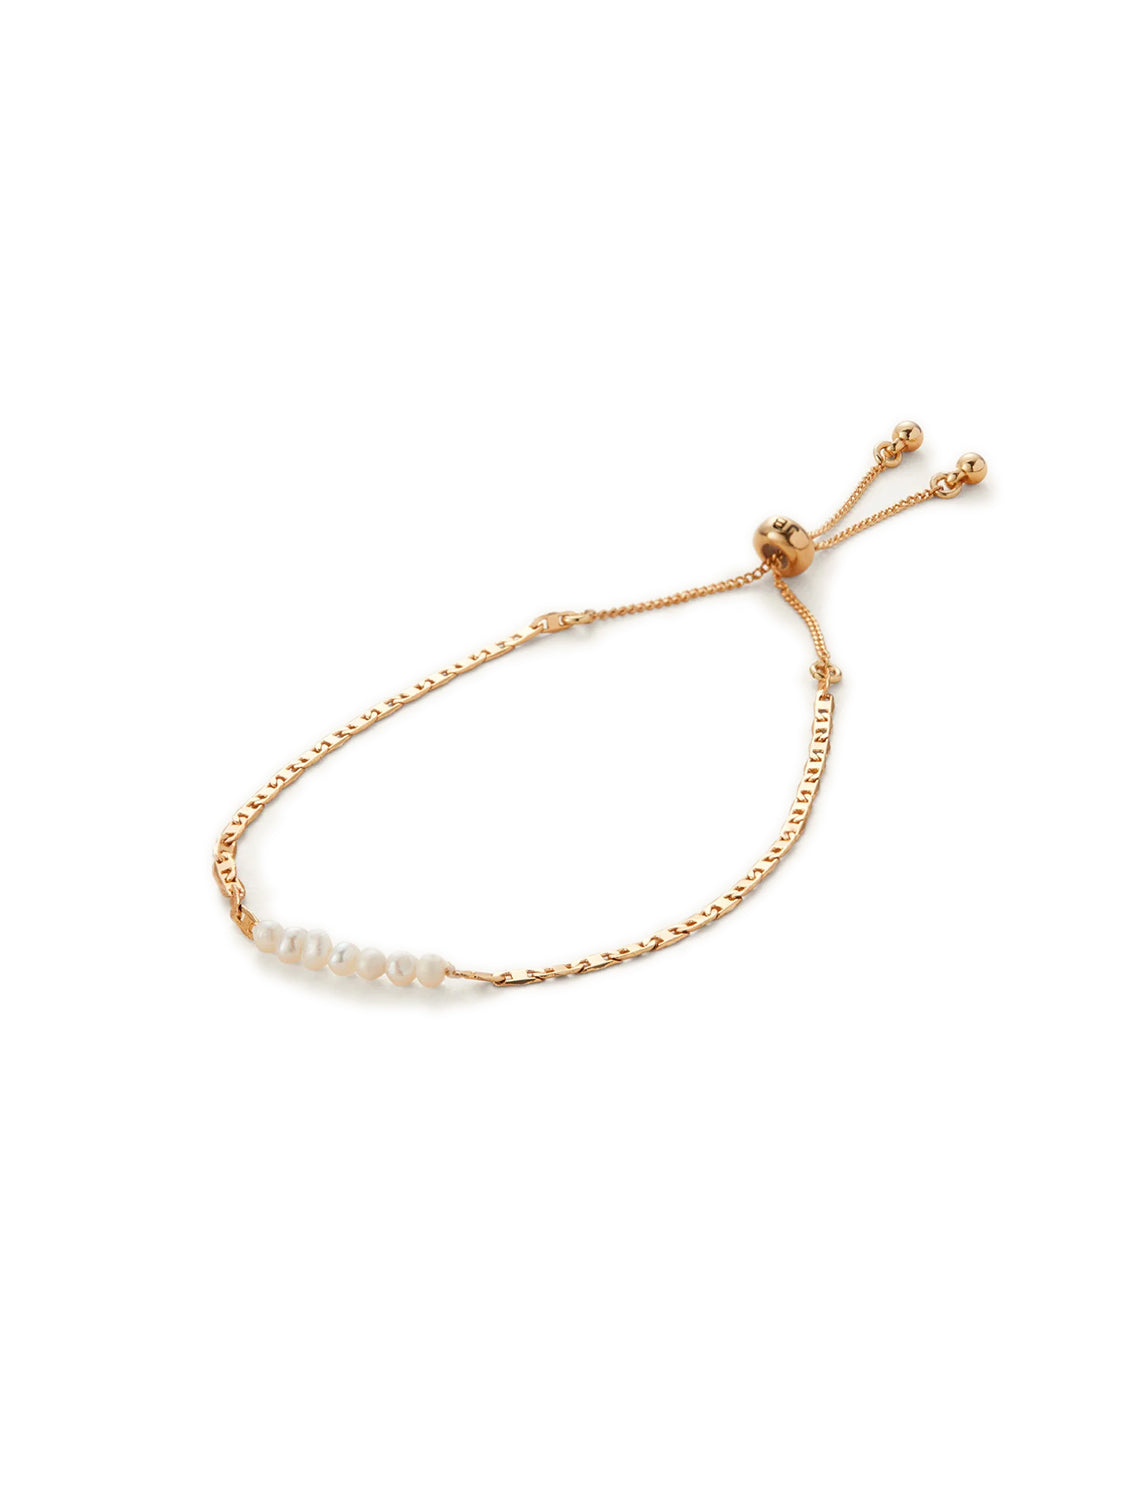 White Gold Diamond XO Bracelet In A Delicate Style